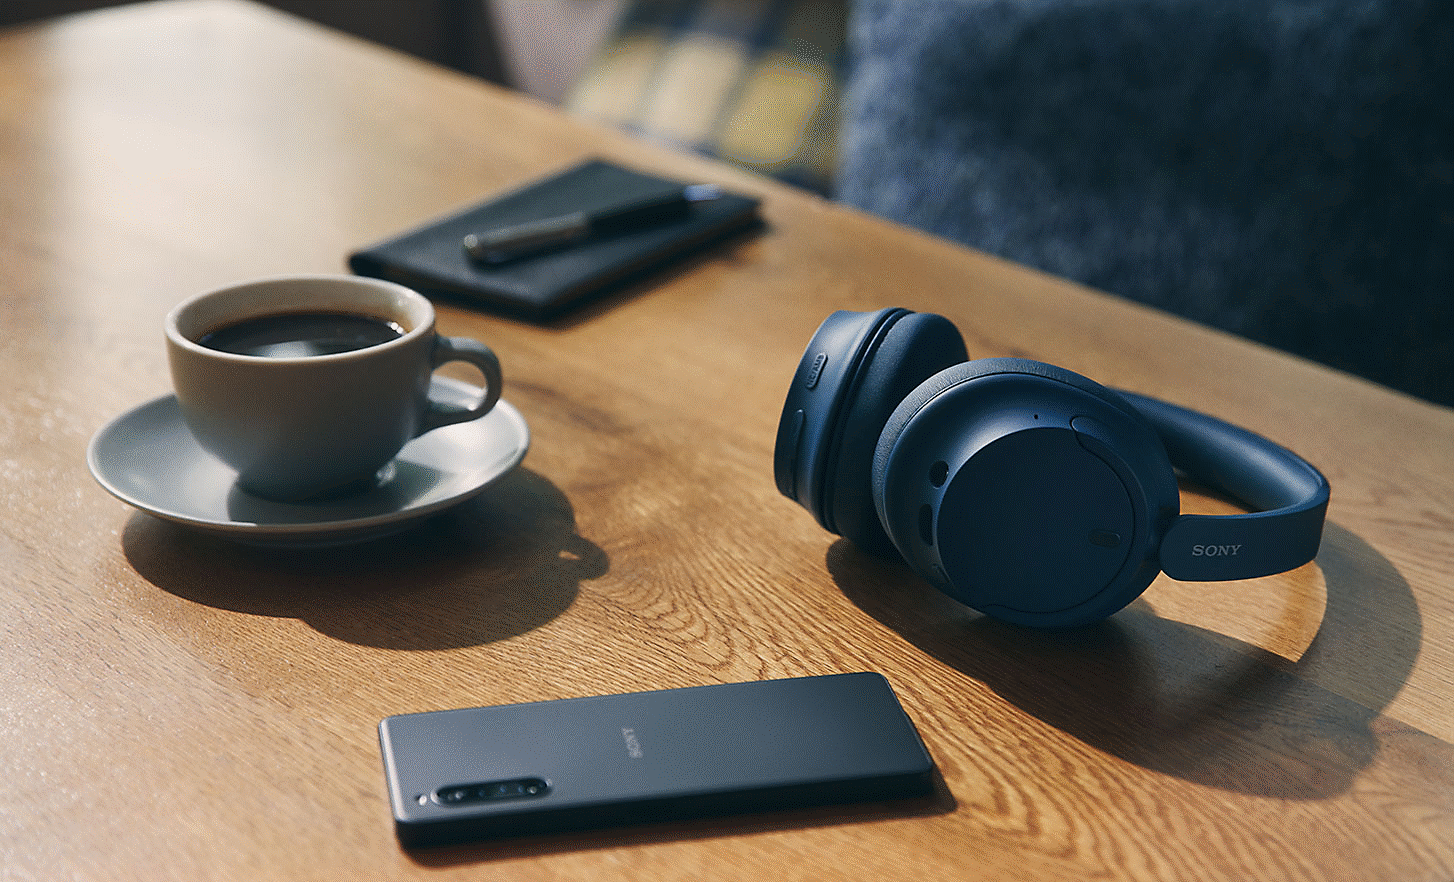 Slika crnih Sony WH-CH720 slušalica na stolu uz Xperia mobilni telefon